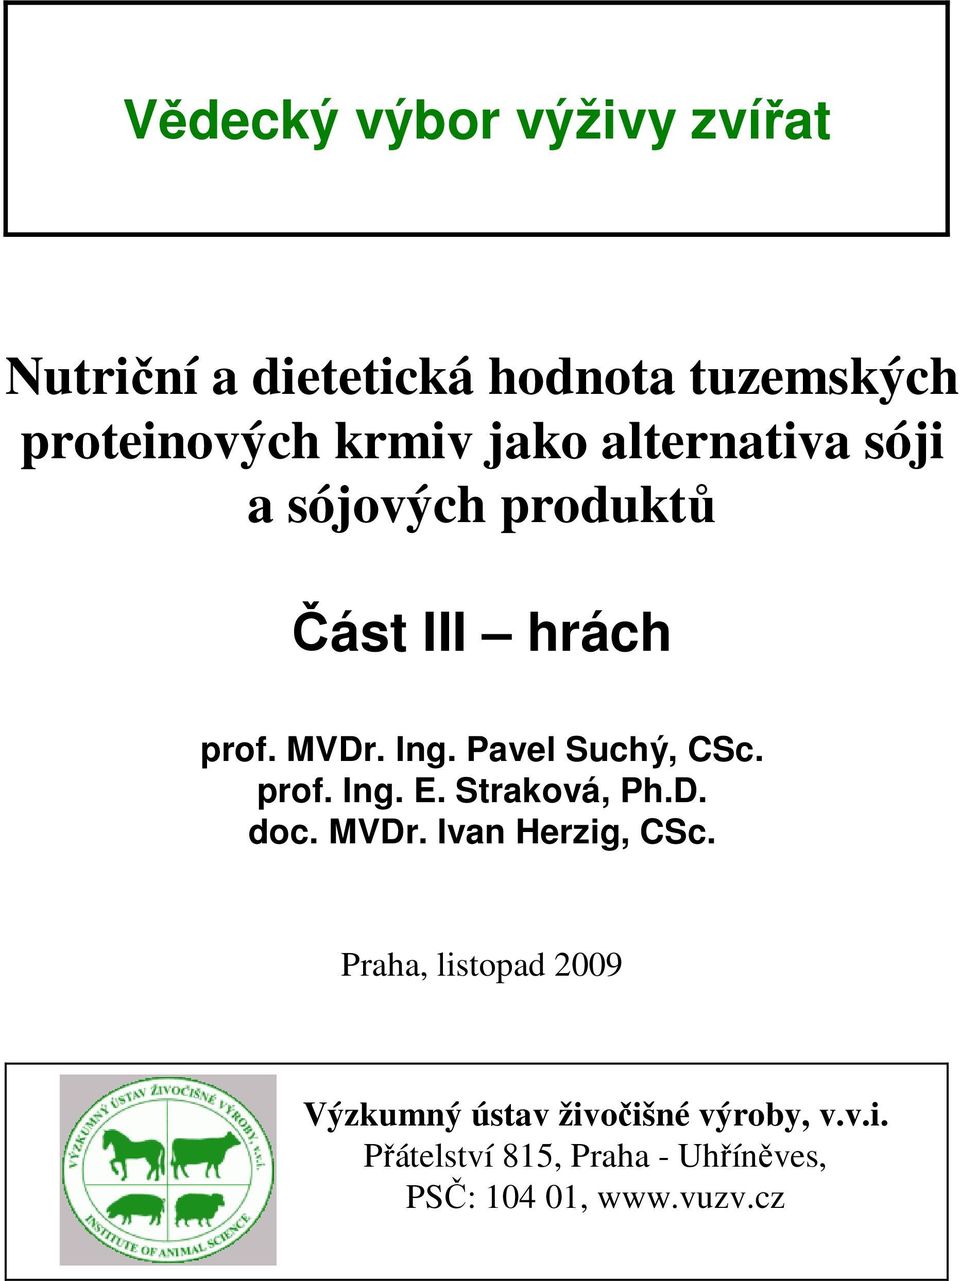 Pavel Suchý, CSc. prof. Ing. E. Straková, Ph.D. doc. MVDr. Ivan Herzig, CSc.